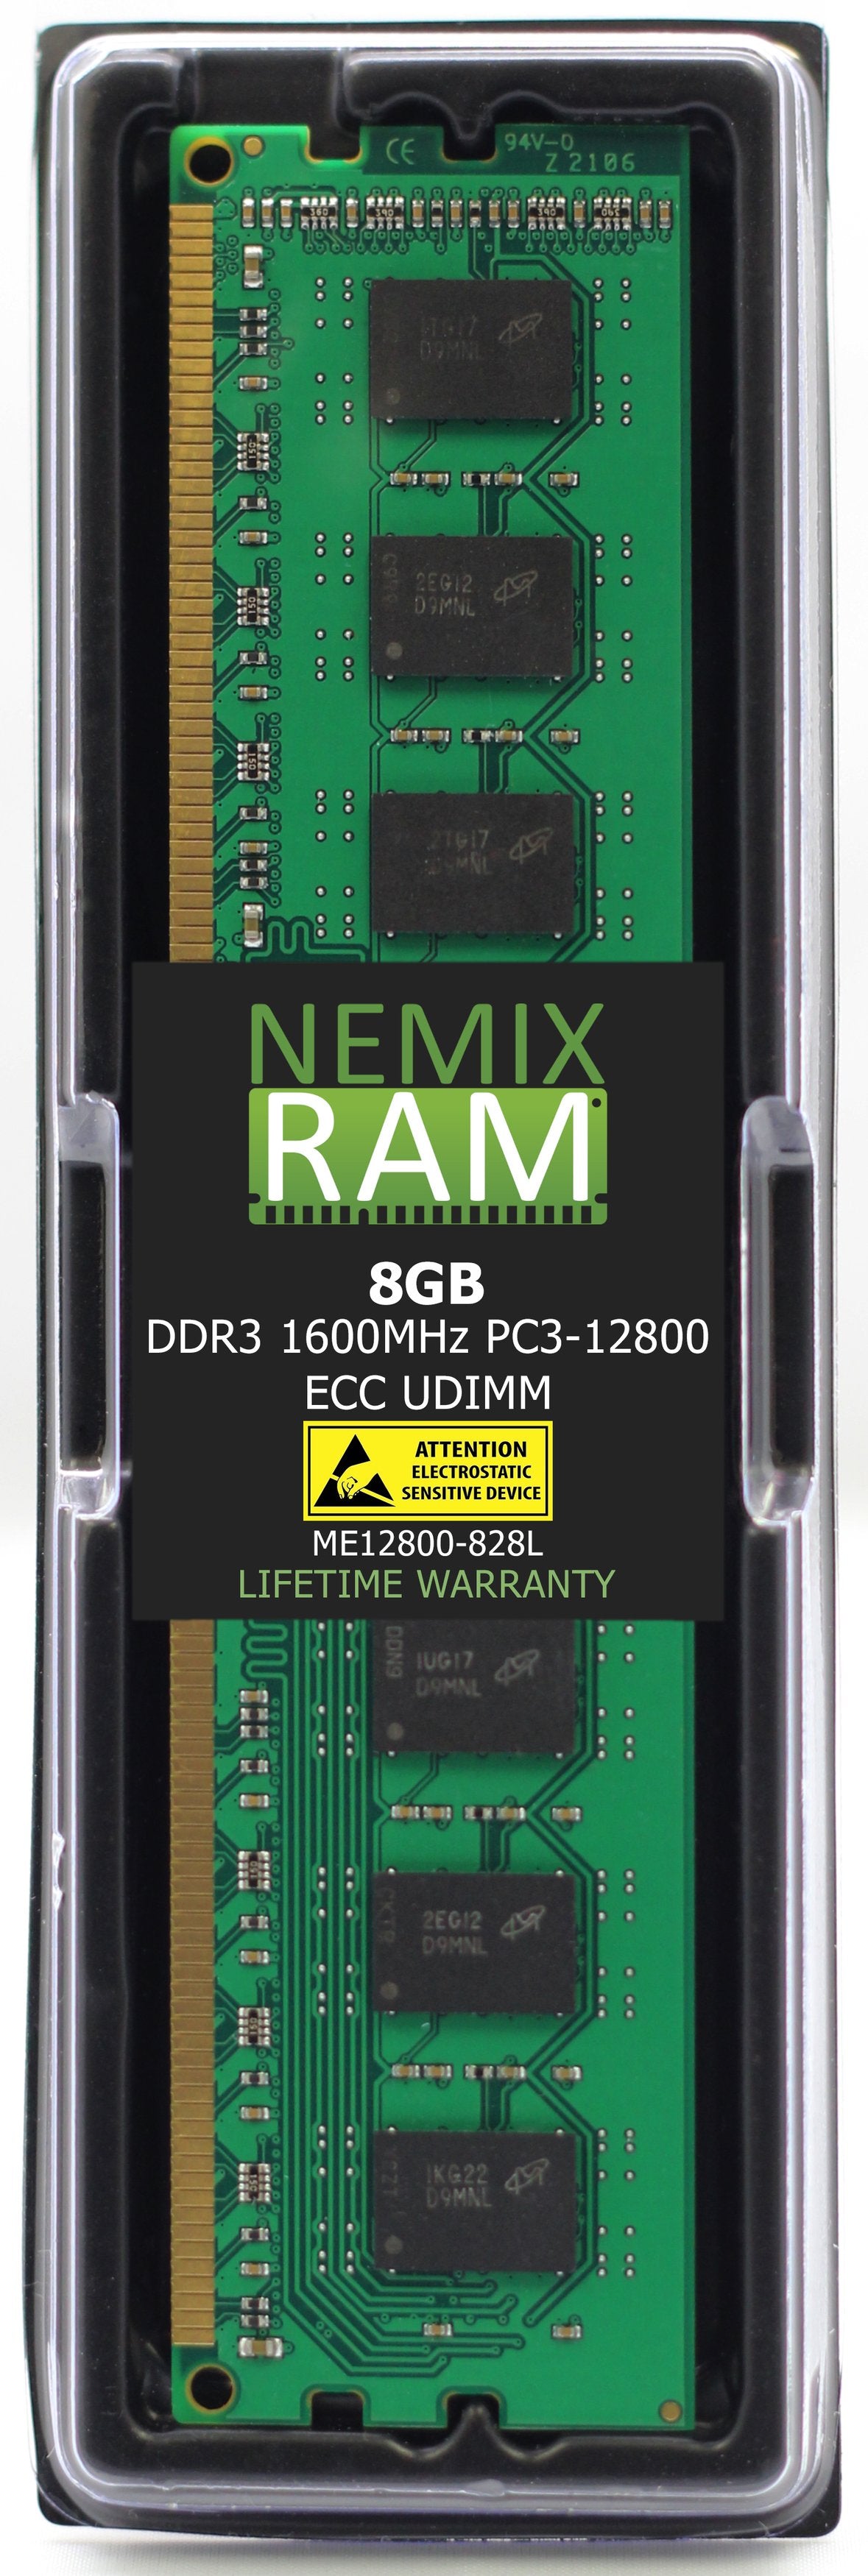 8GB DDR3 1600MHZ PC3-12800 ECC UDIMM Compatible with Supermicro MEM-DR380L-SL03-EU16